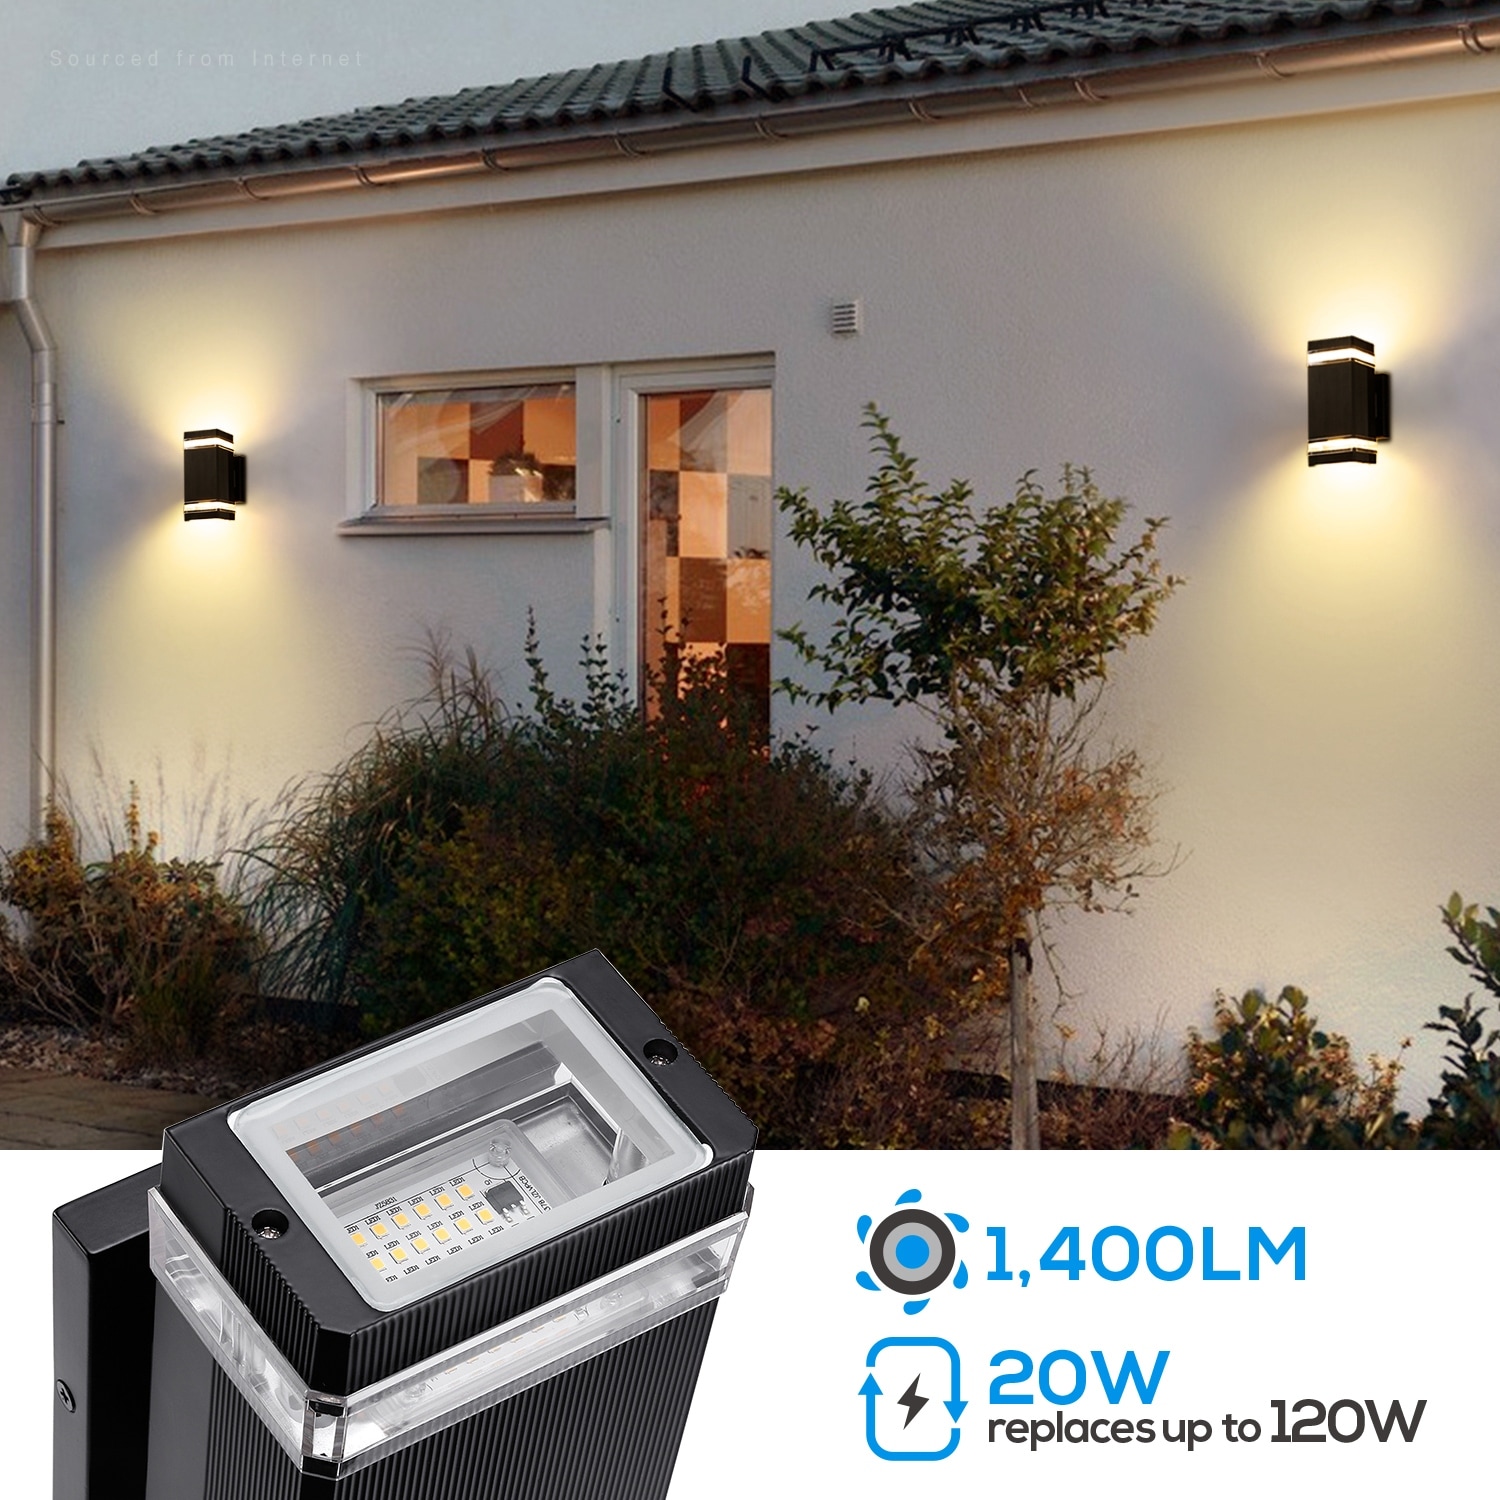 5 x 20W LED Flood Light Outdoor Wall Spotlight Landscape Garden Warm White Lamp 